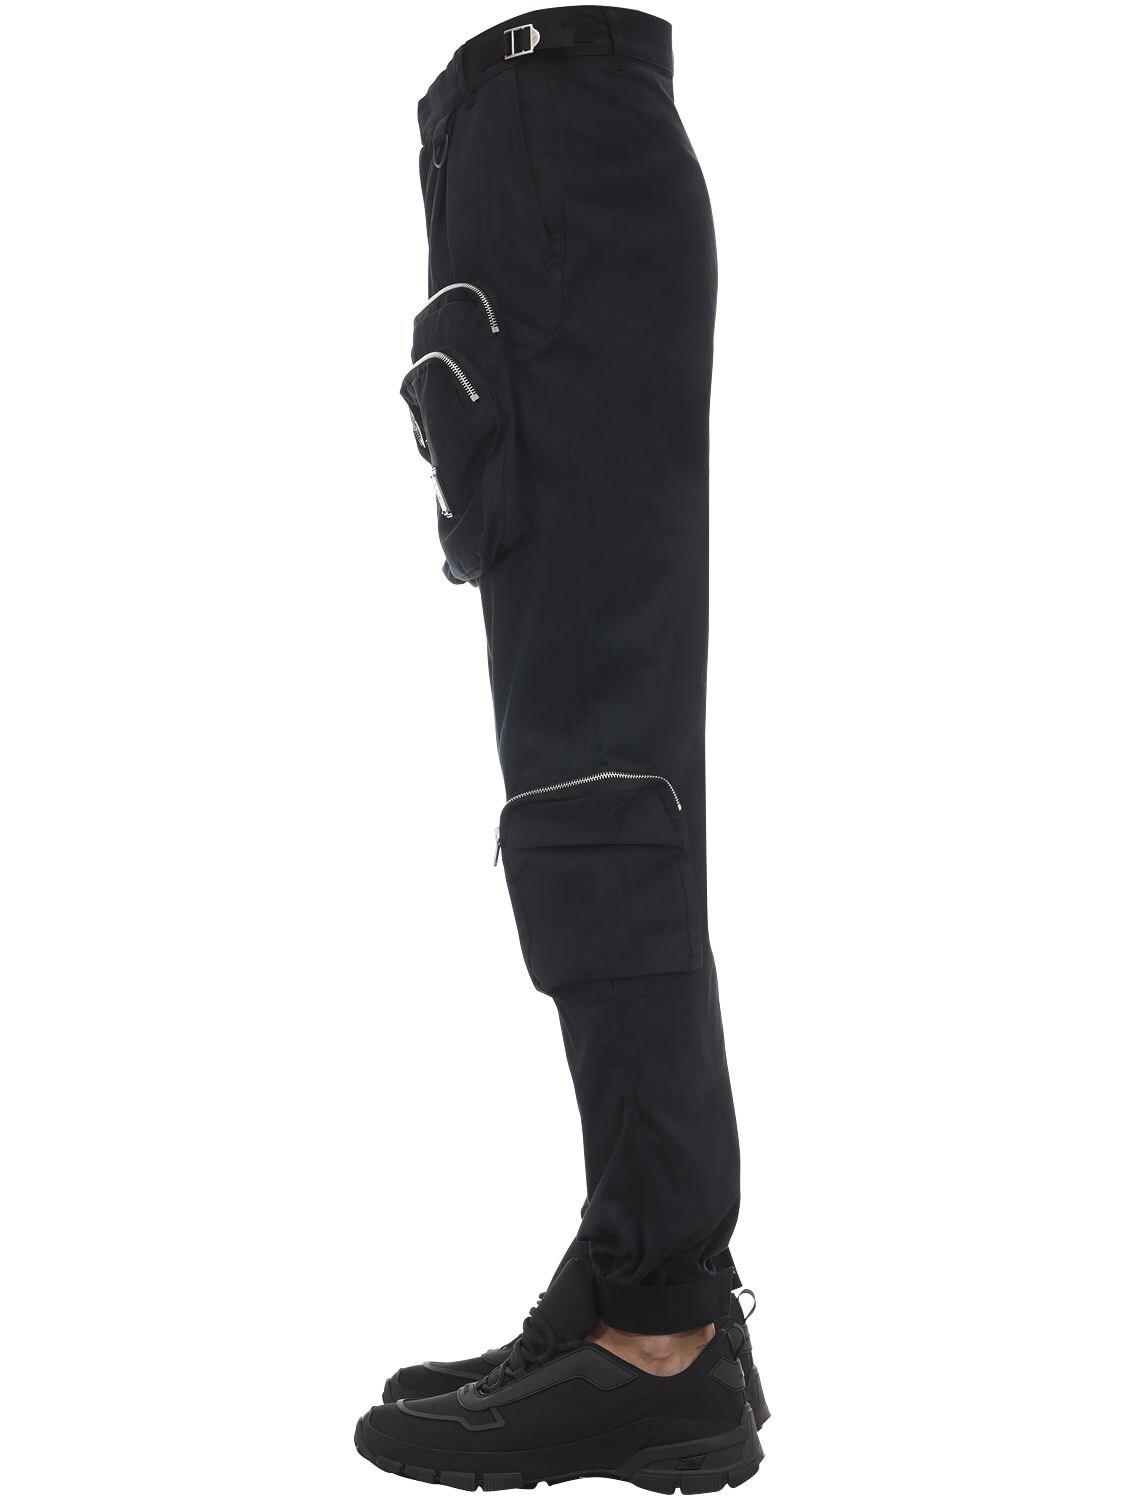 Represent Cotton Cargo Pants in Black for Men - Lyst